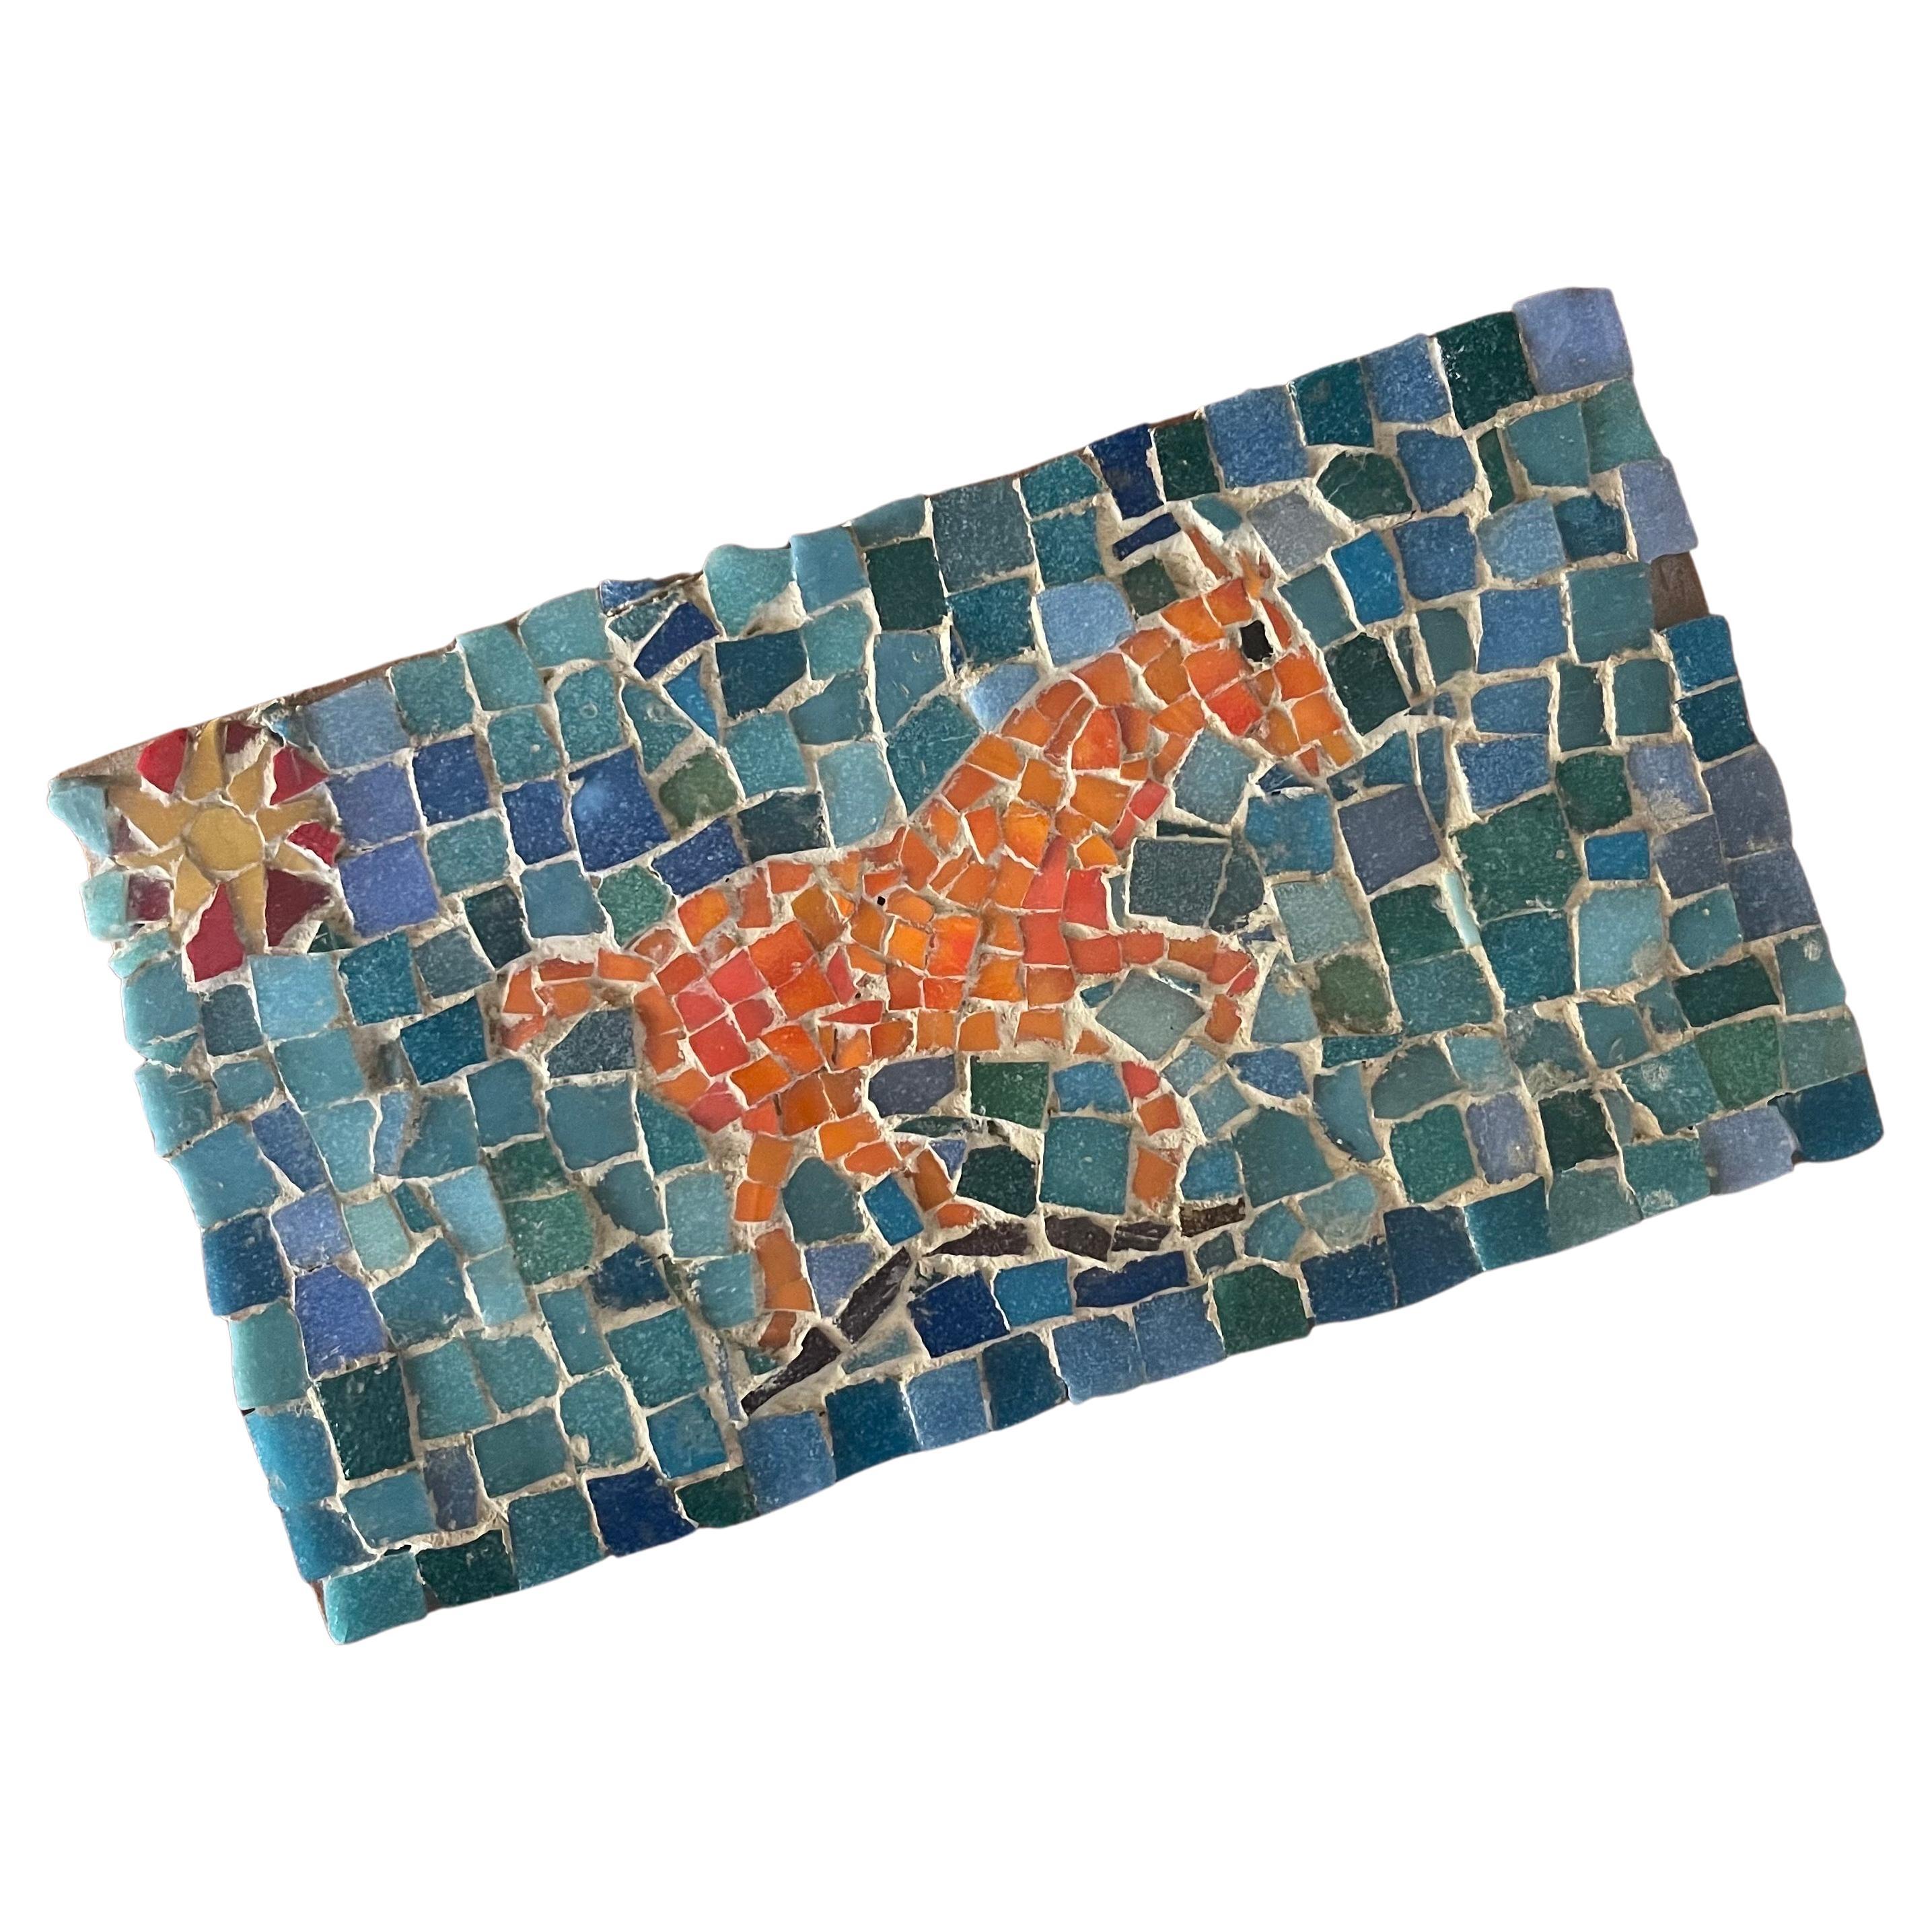 Horse Scene Mosaic on Board by David Lavington For Sale